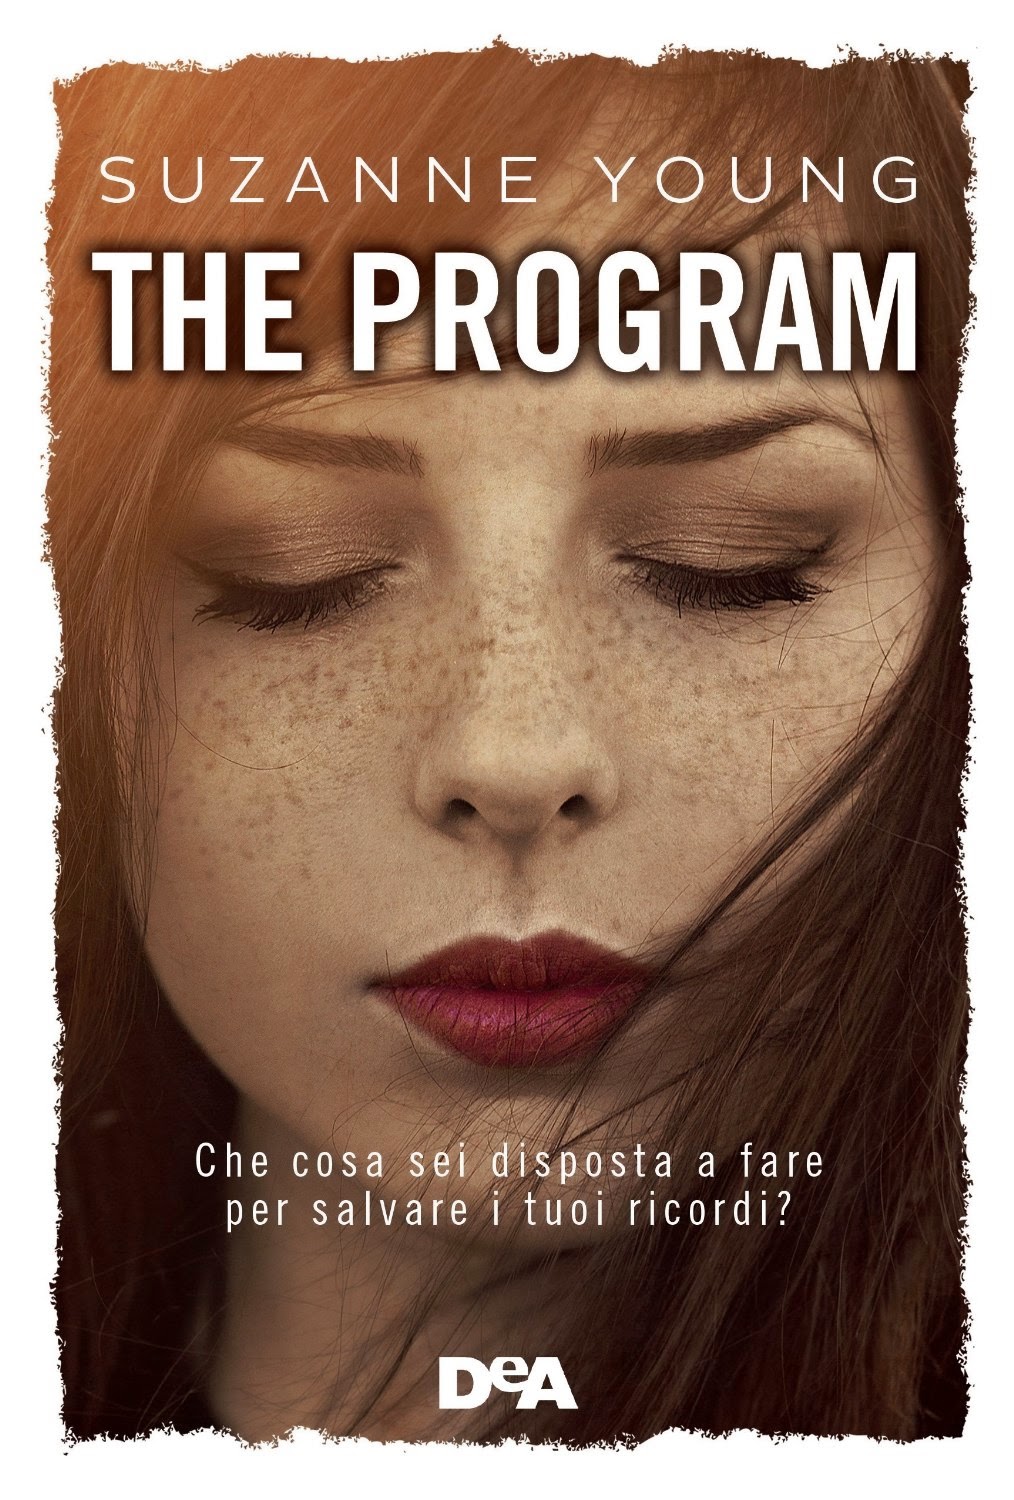 Speciale: "The Program" di Suzanne Young